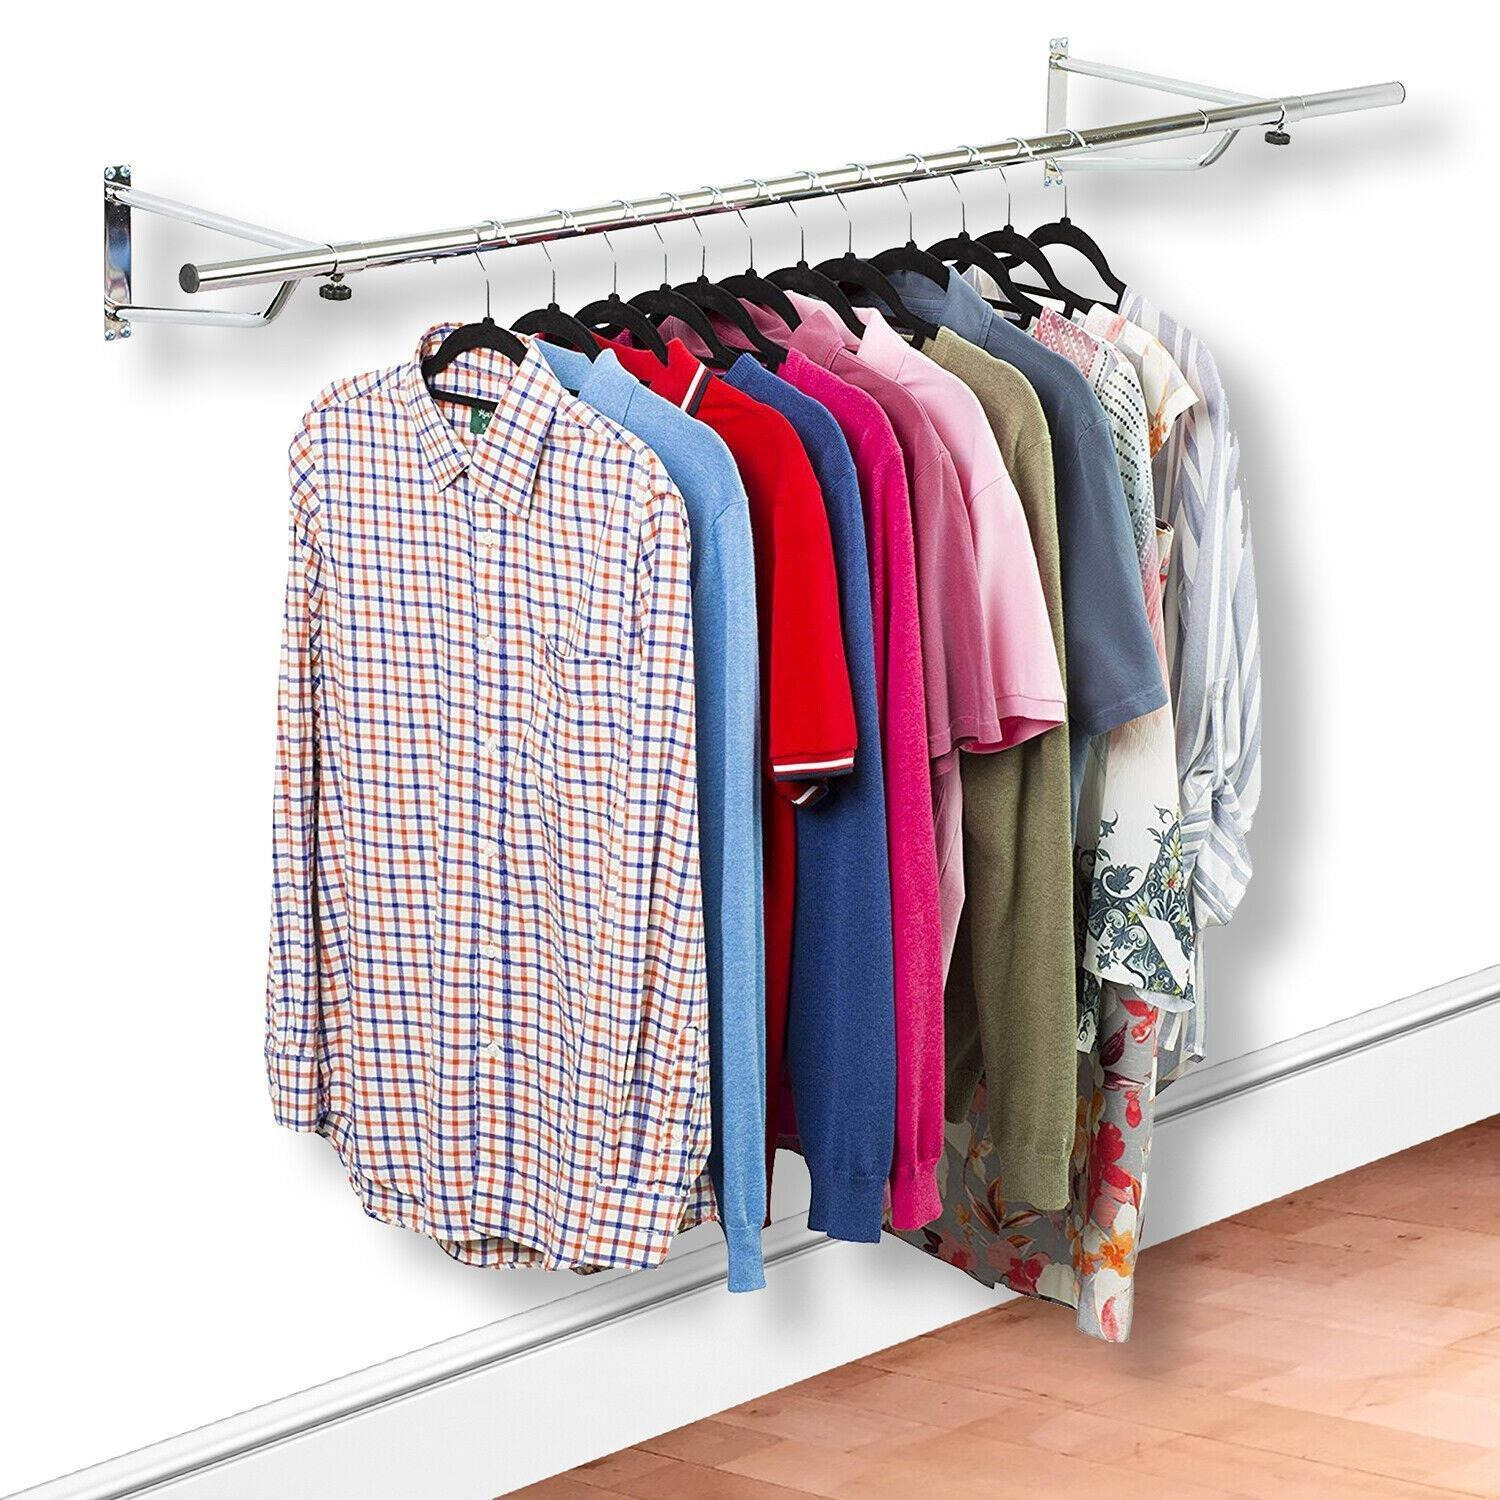 Clothes Rail Wall Mounted Garment Hanging Wardrobe Rack Storage Size 4ft Long - image 1